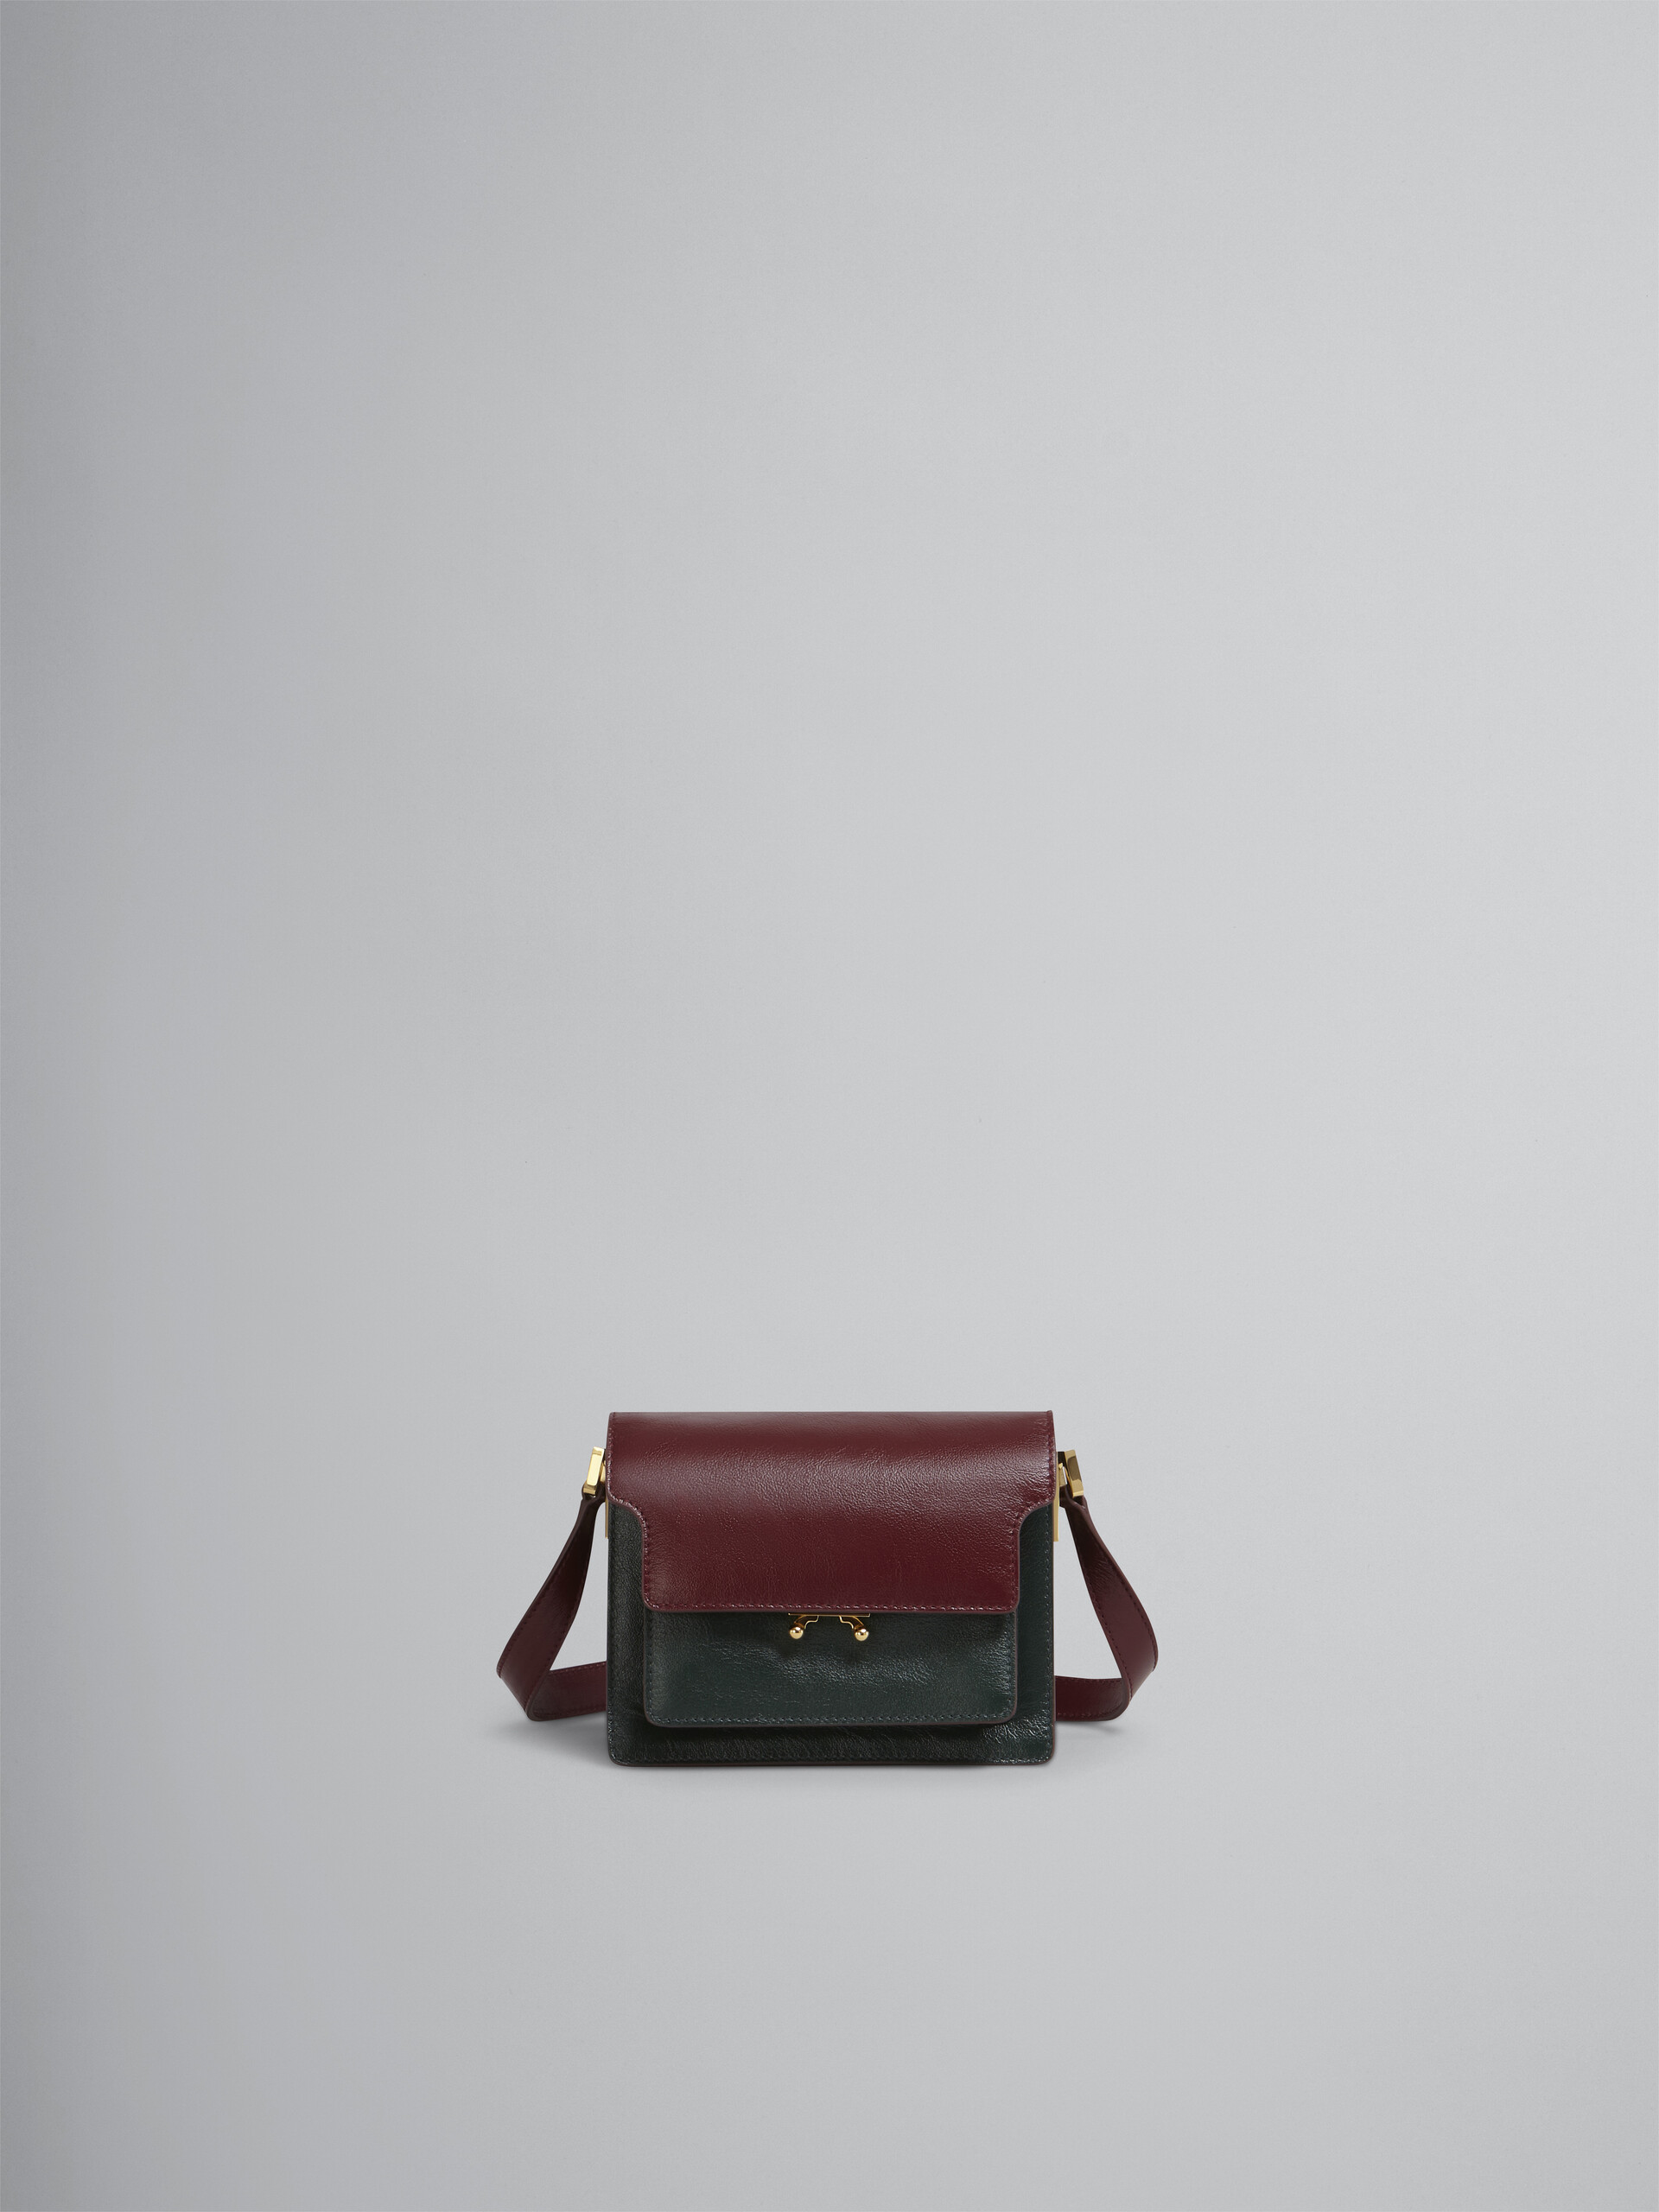 TRUNK SOFT mini bag in green and burgundy leather - Shoulder Bag - Image 1